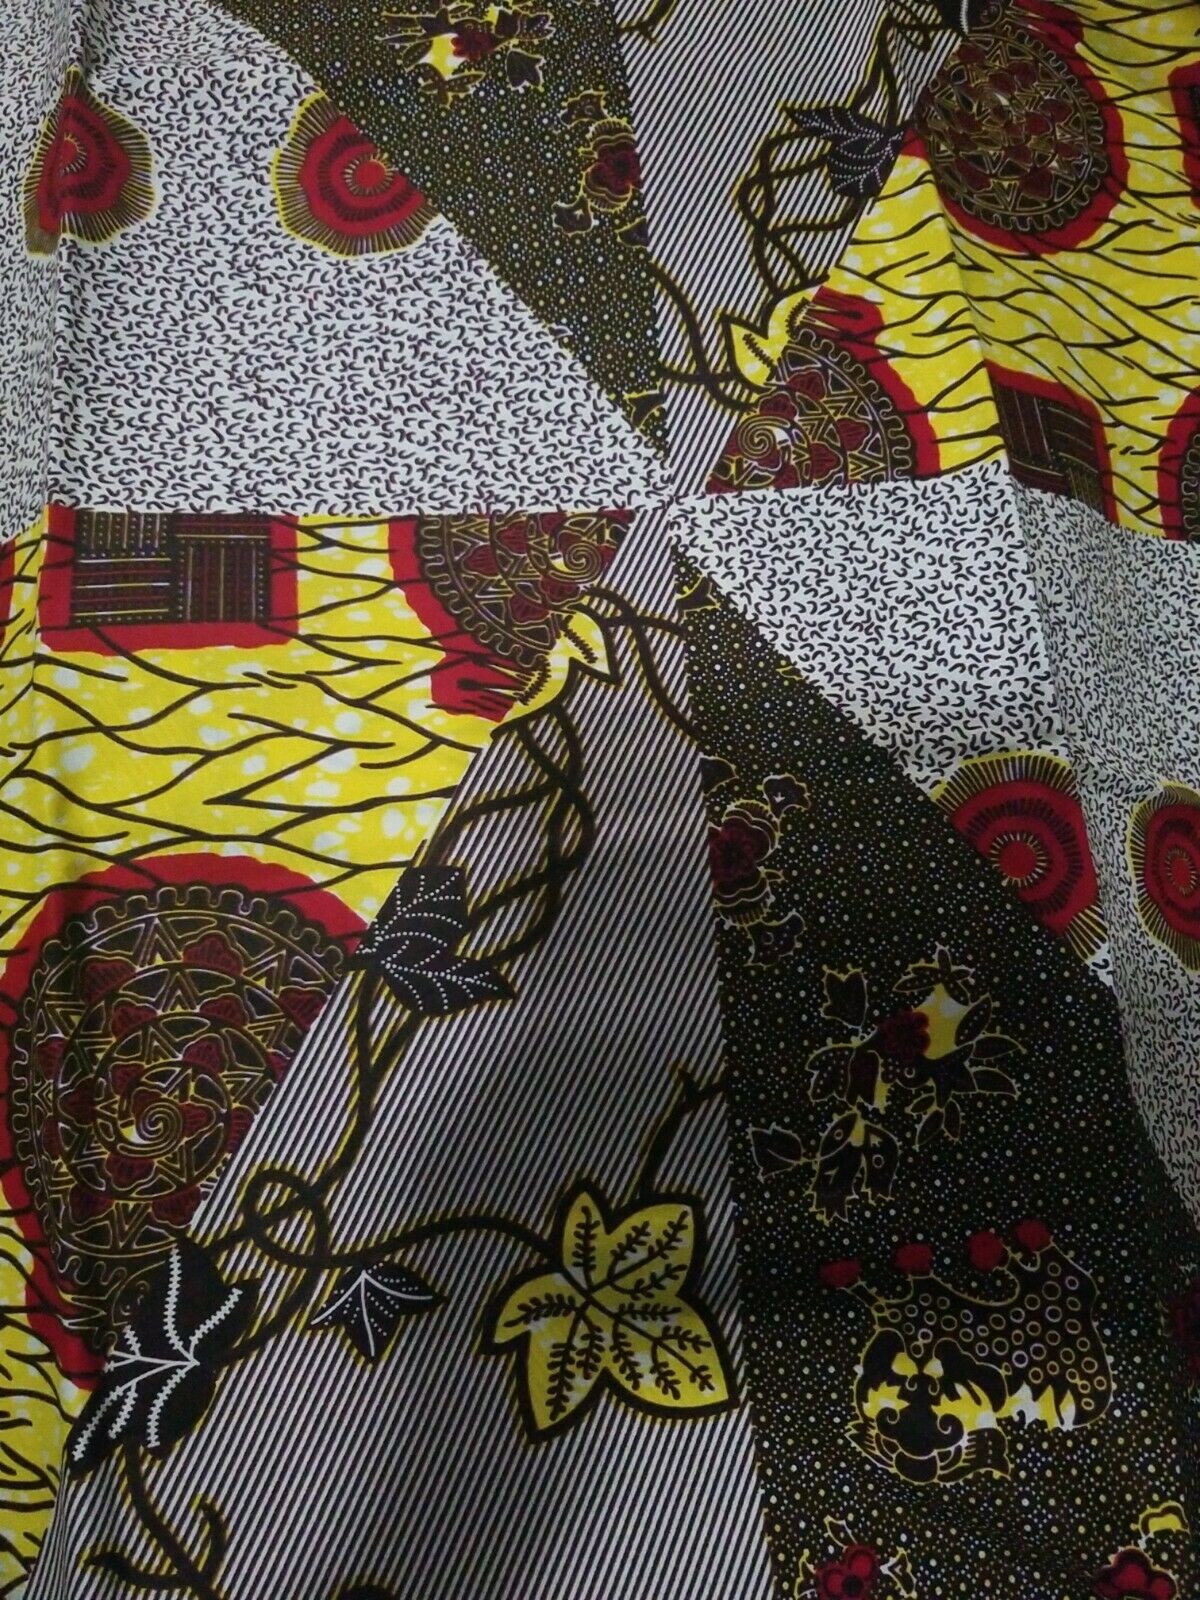 Assorted motif vibrant Yellow African Print fabric ~1yard $7